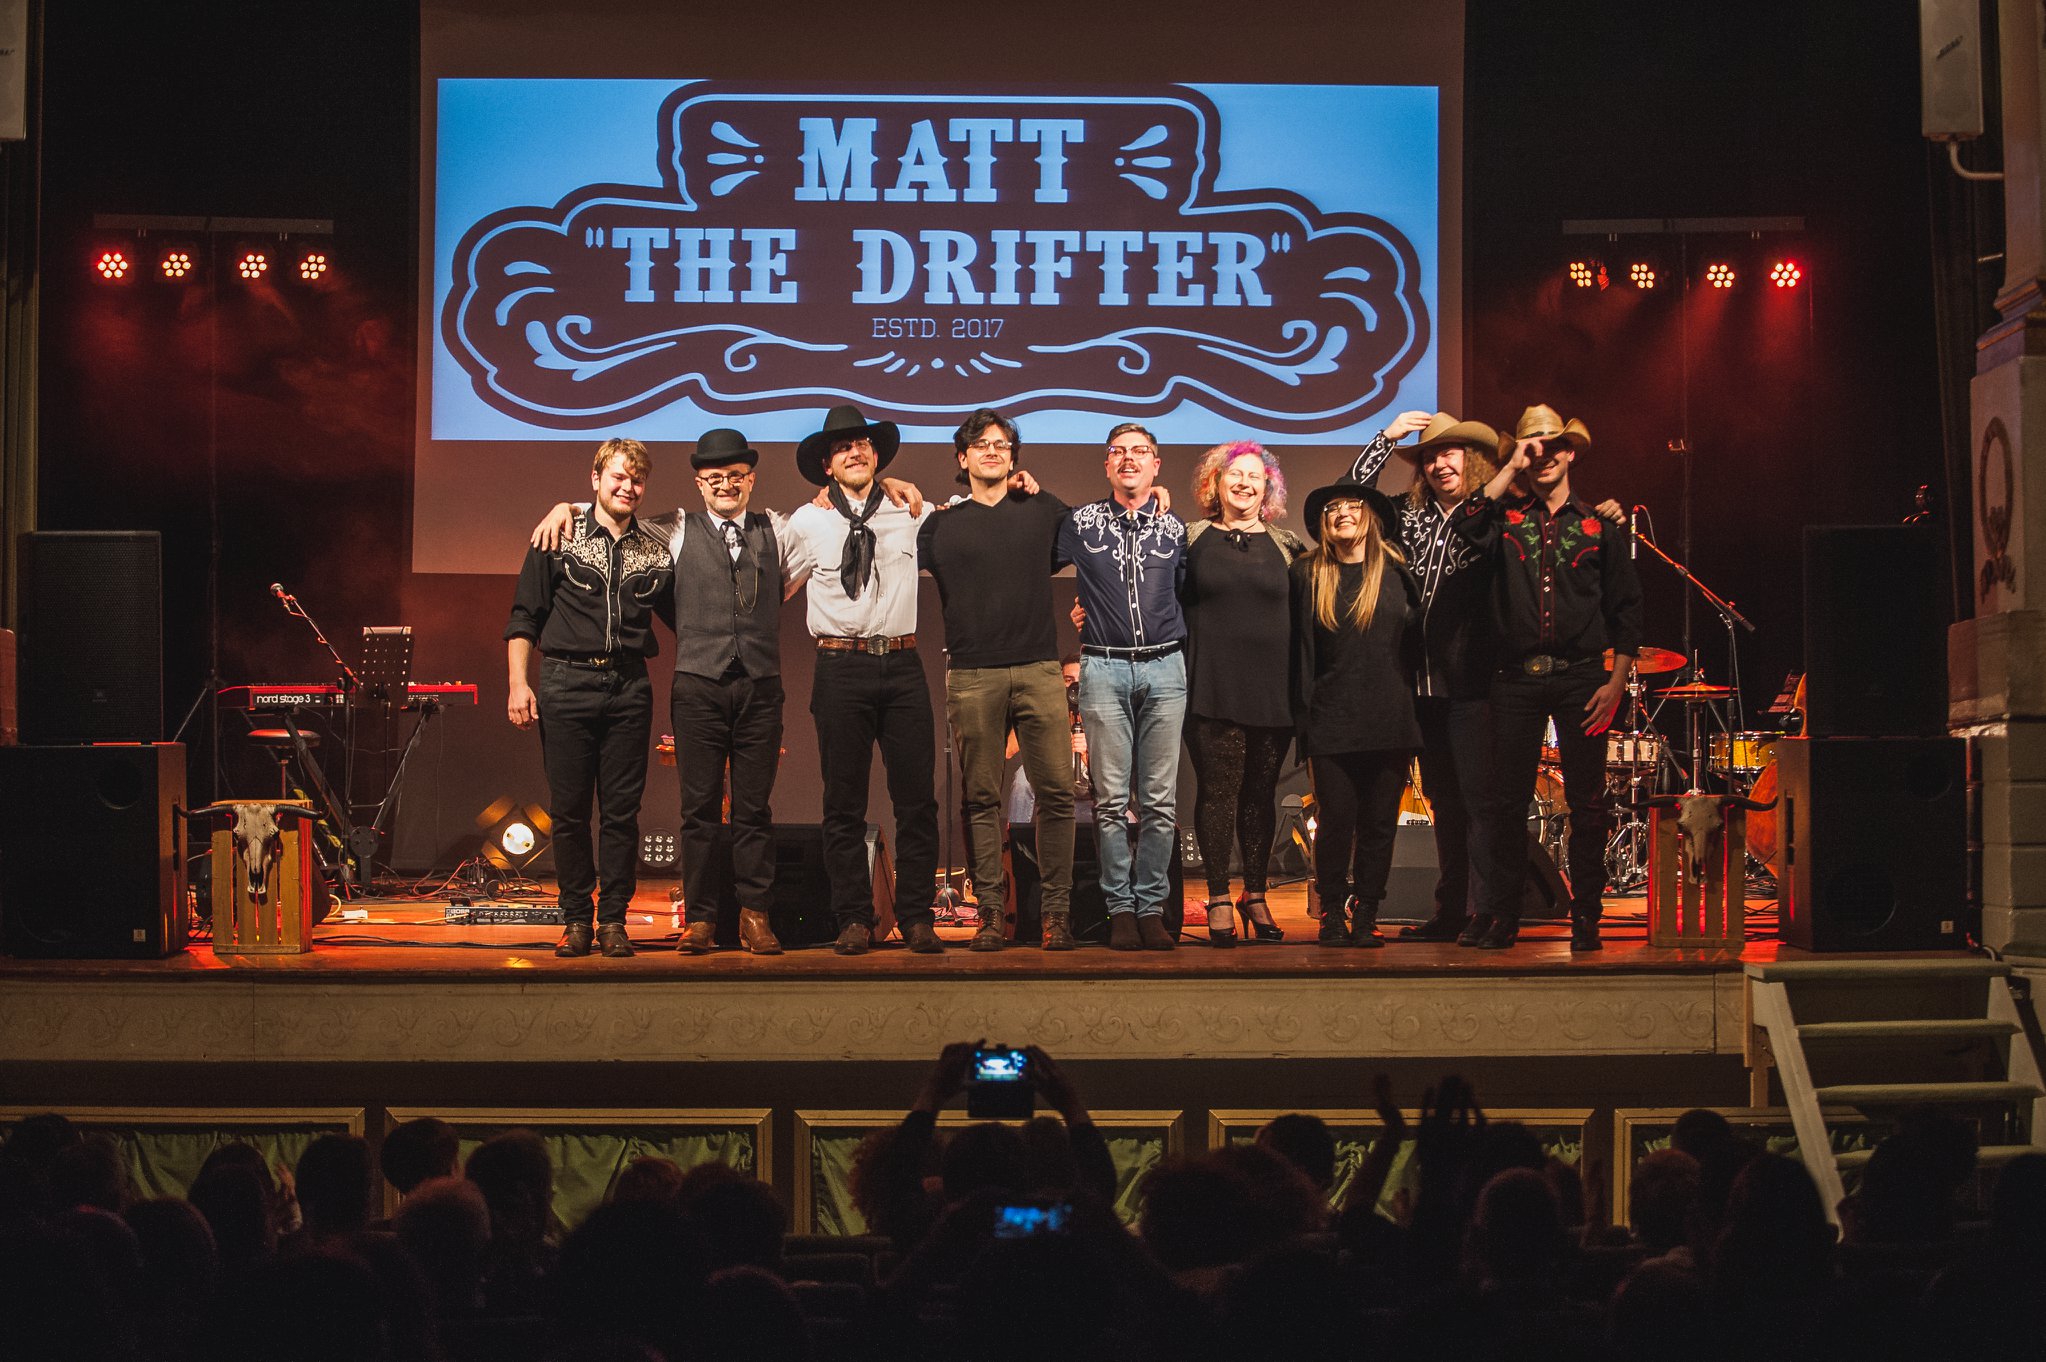 w/ Matt "the drifter" - Castelfranco V.to (TV) 2019